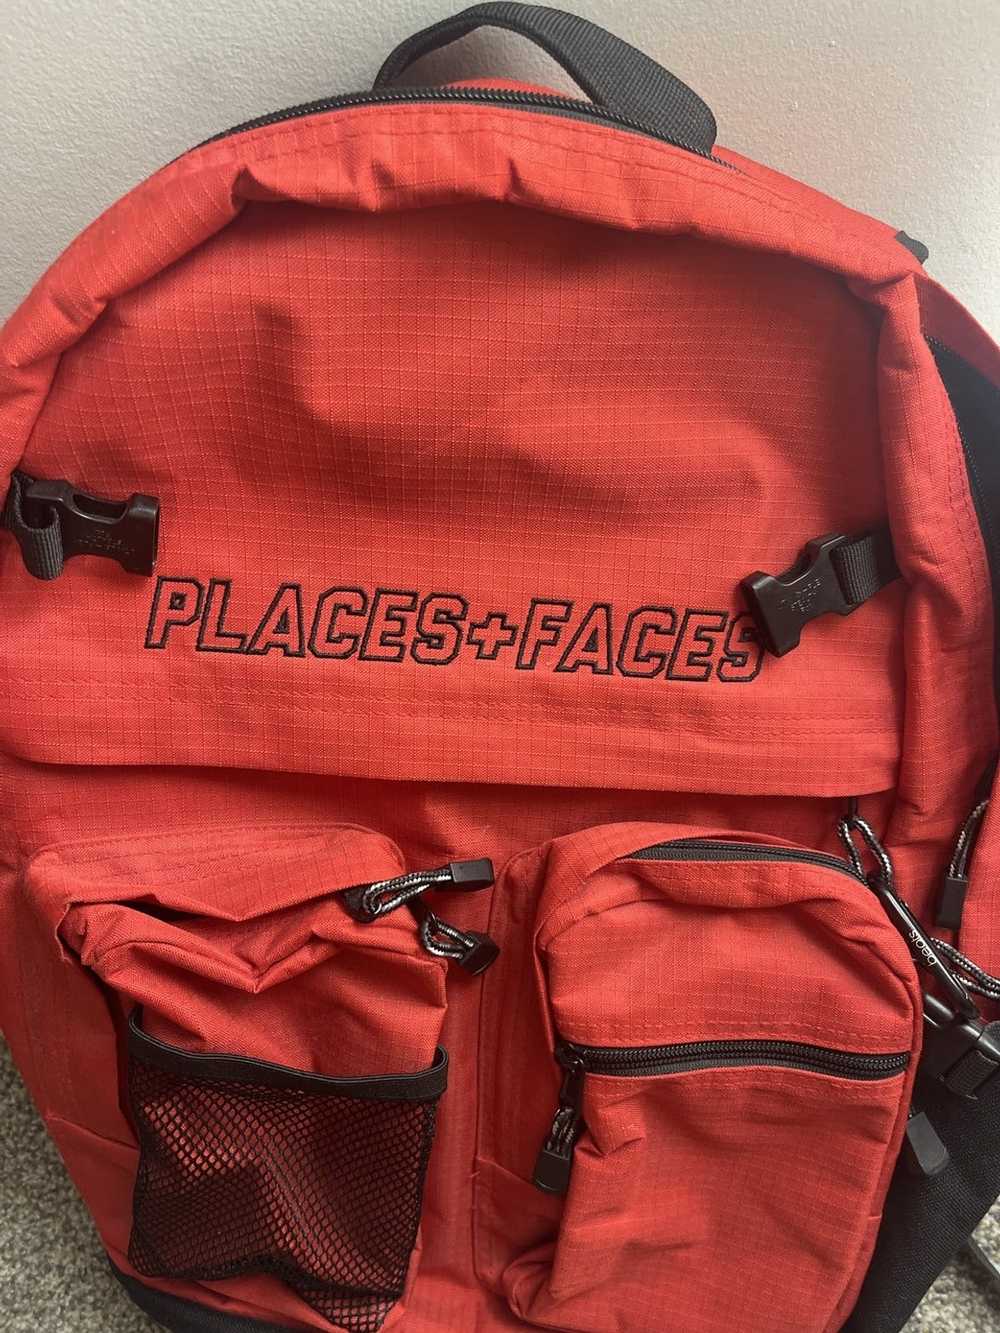 Places + Faces Places faces backpack - image 6